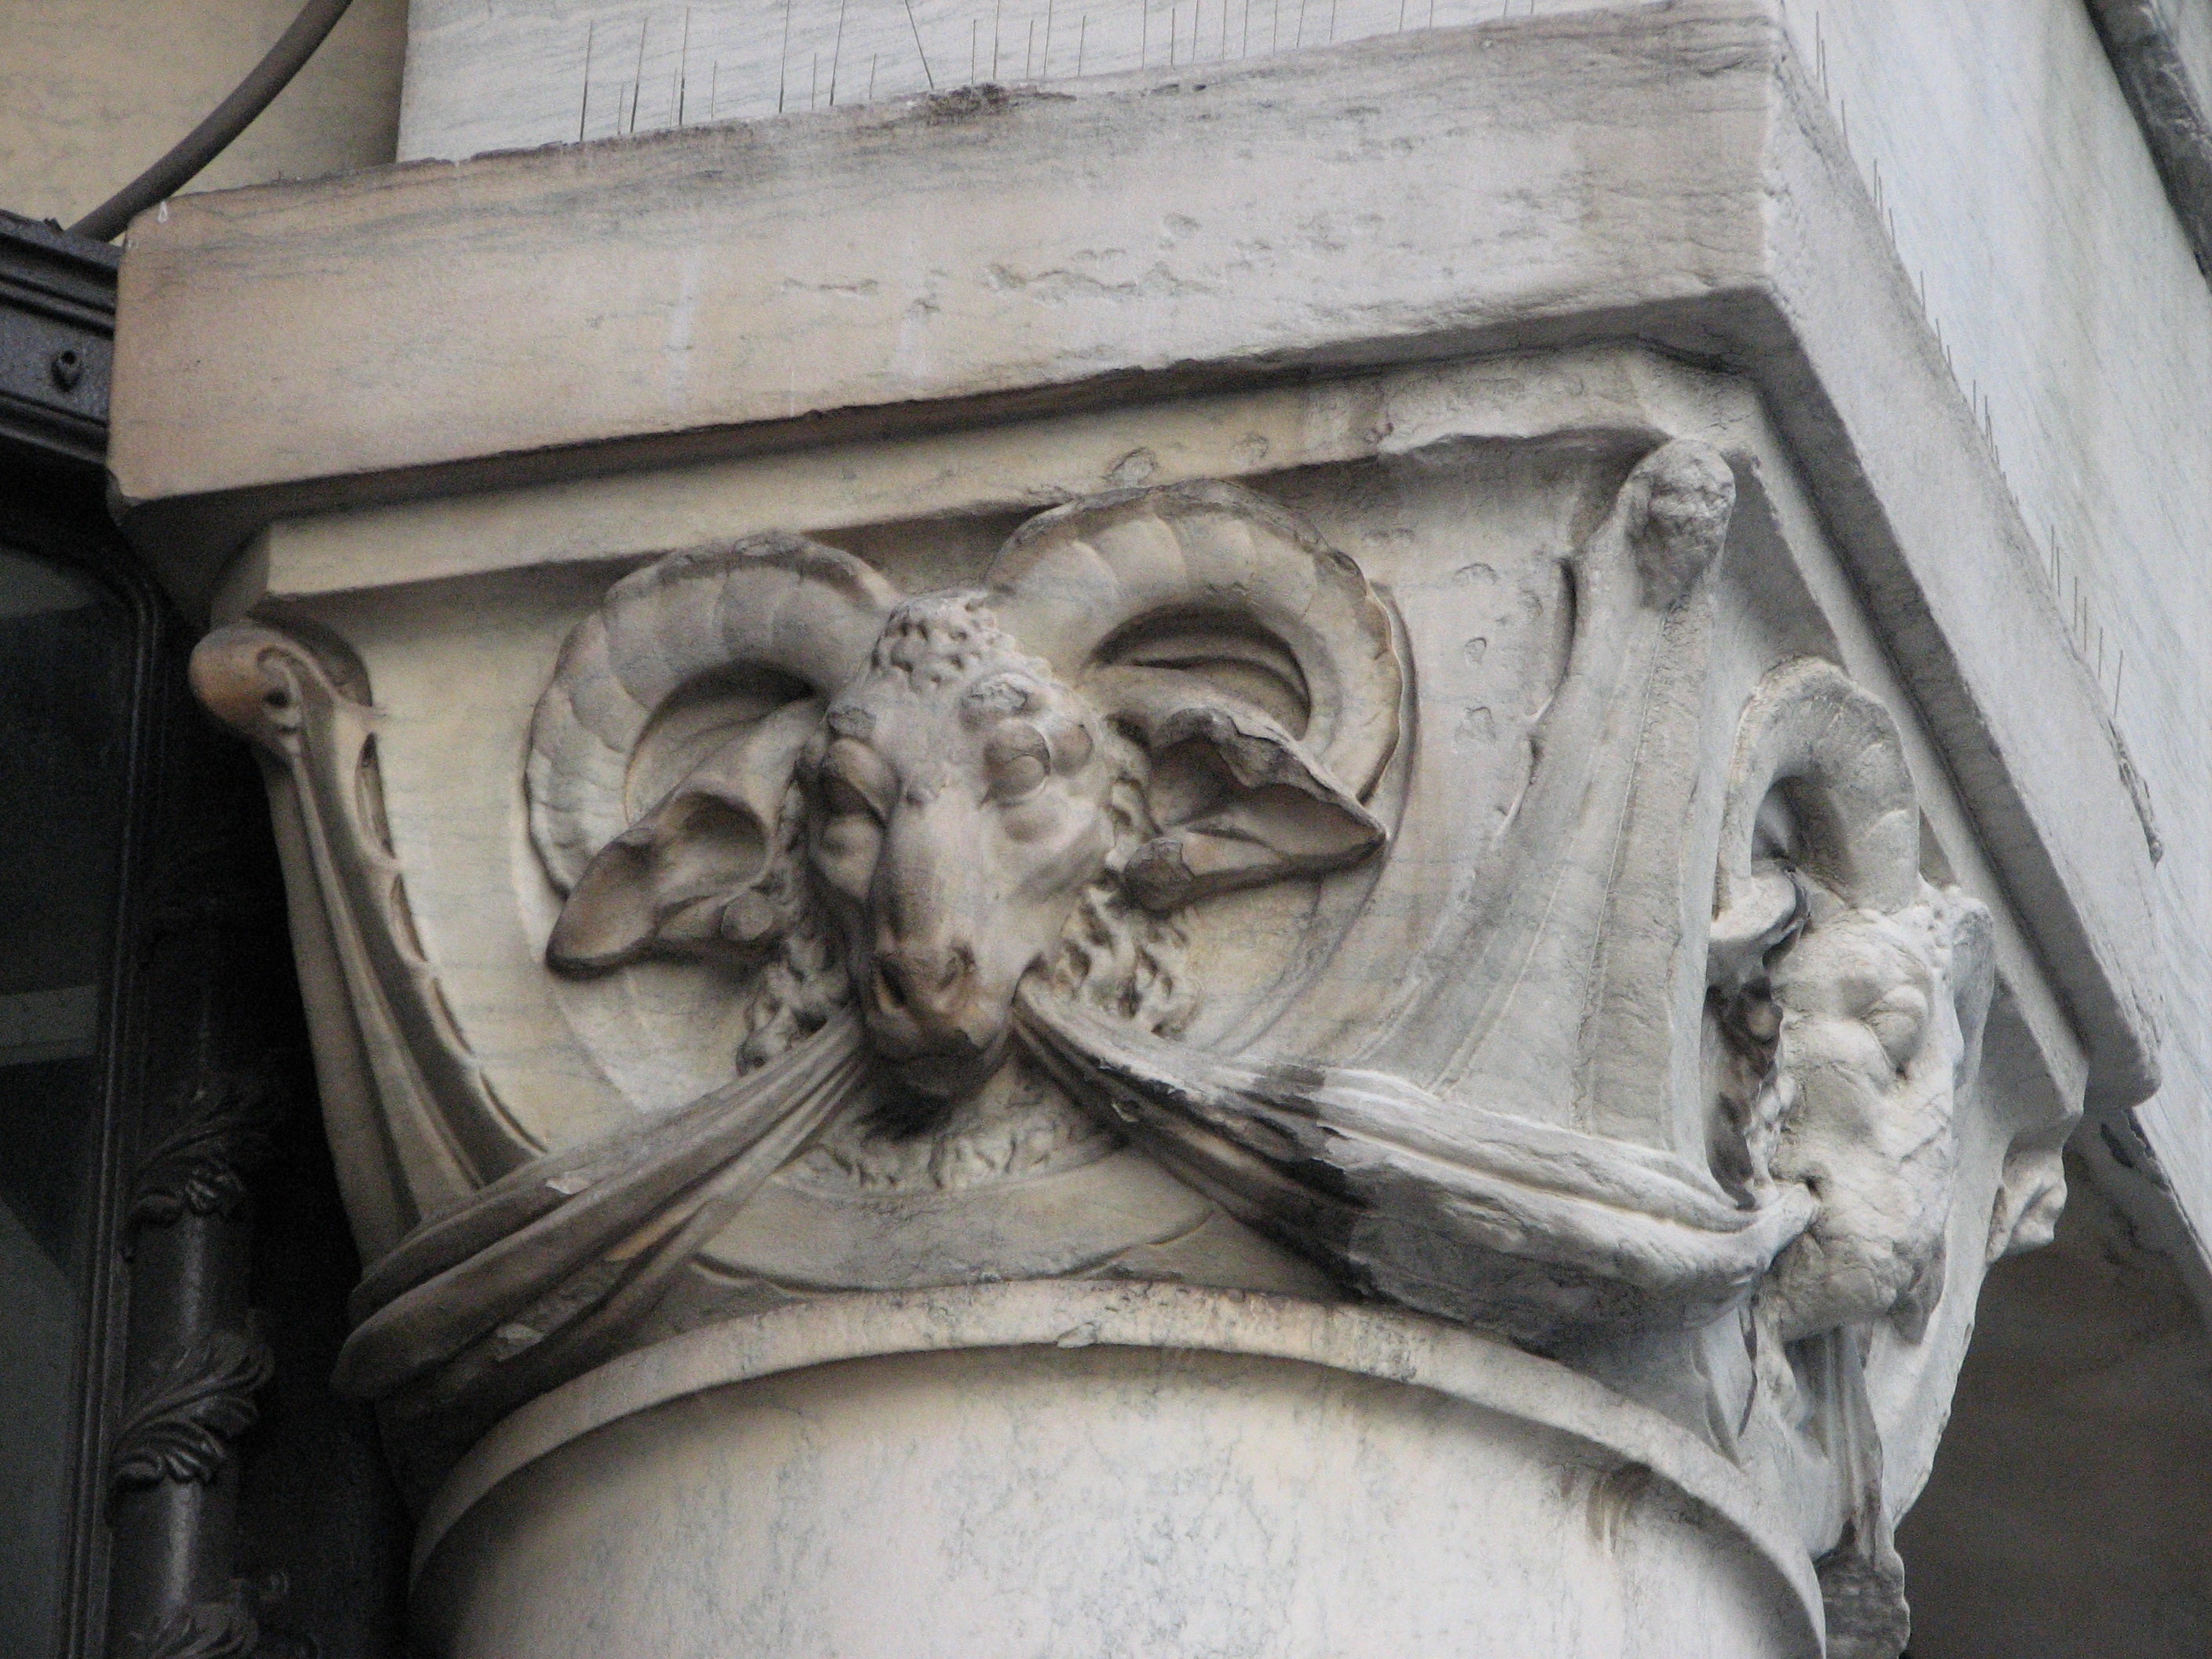 Rams' heads adorn the column capitals.